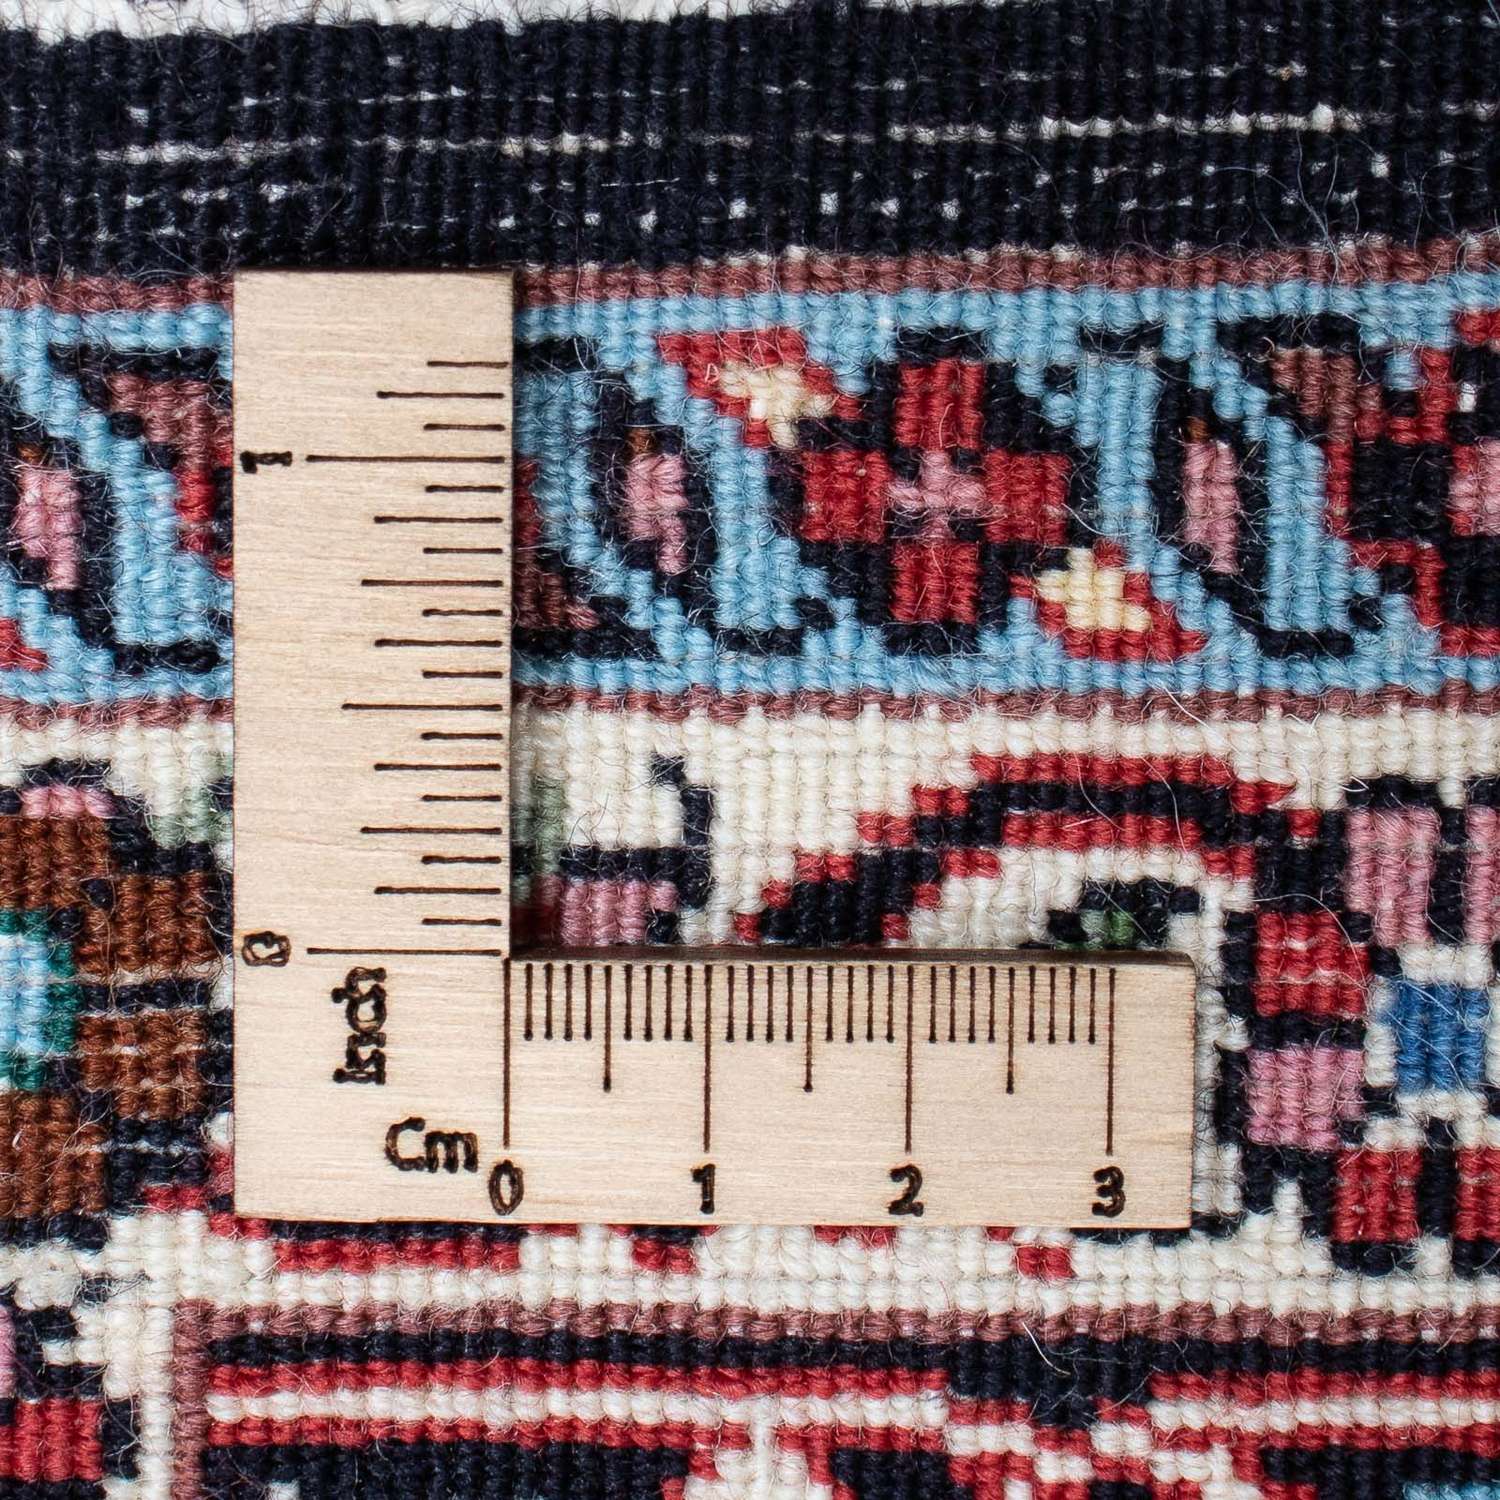 Persisk tæppe - Bijar - 211 x 126 cm - lysrød